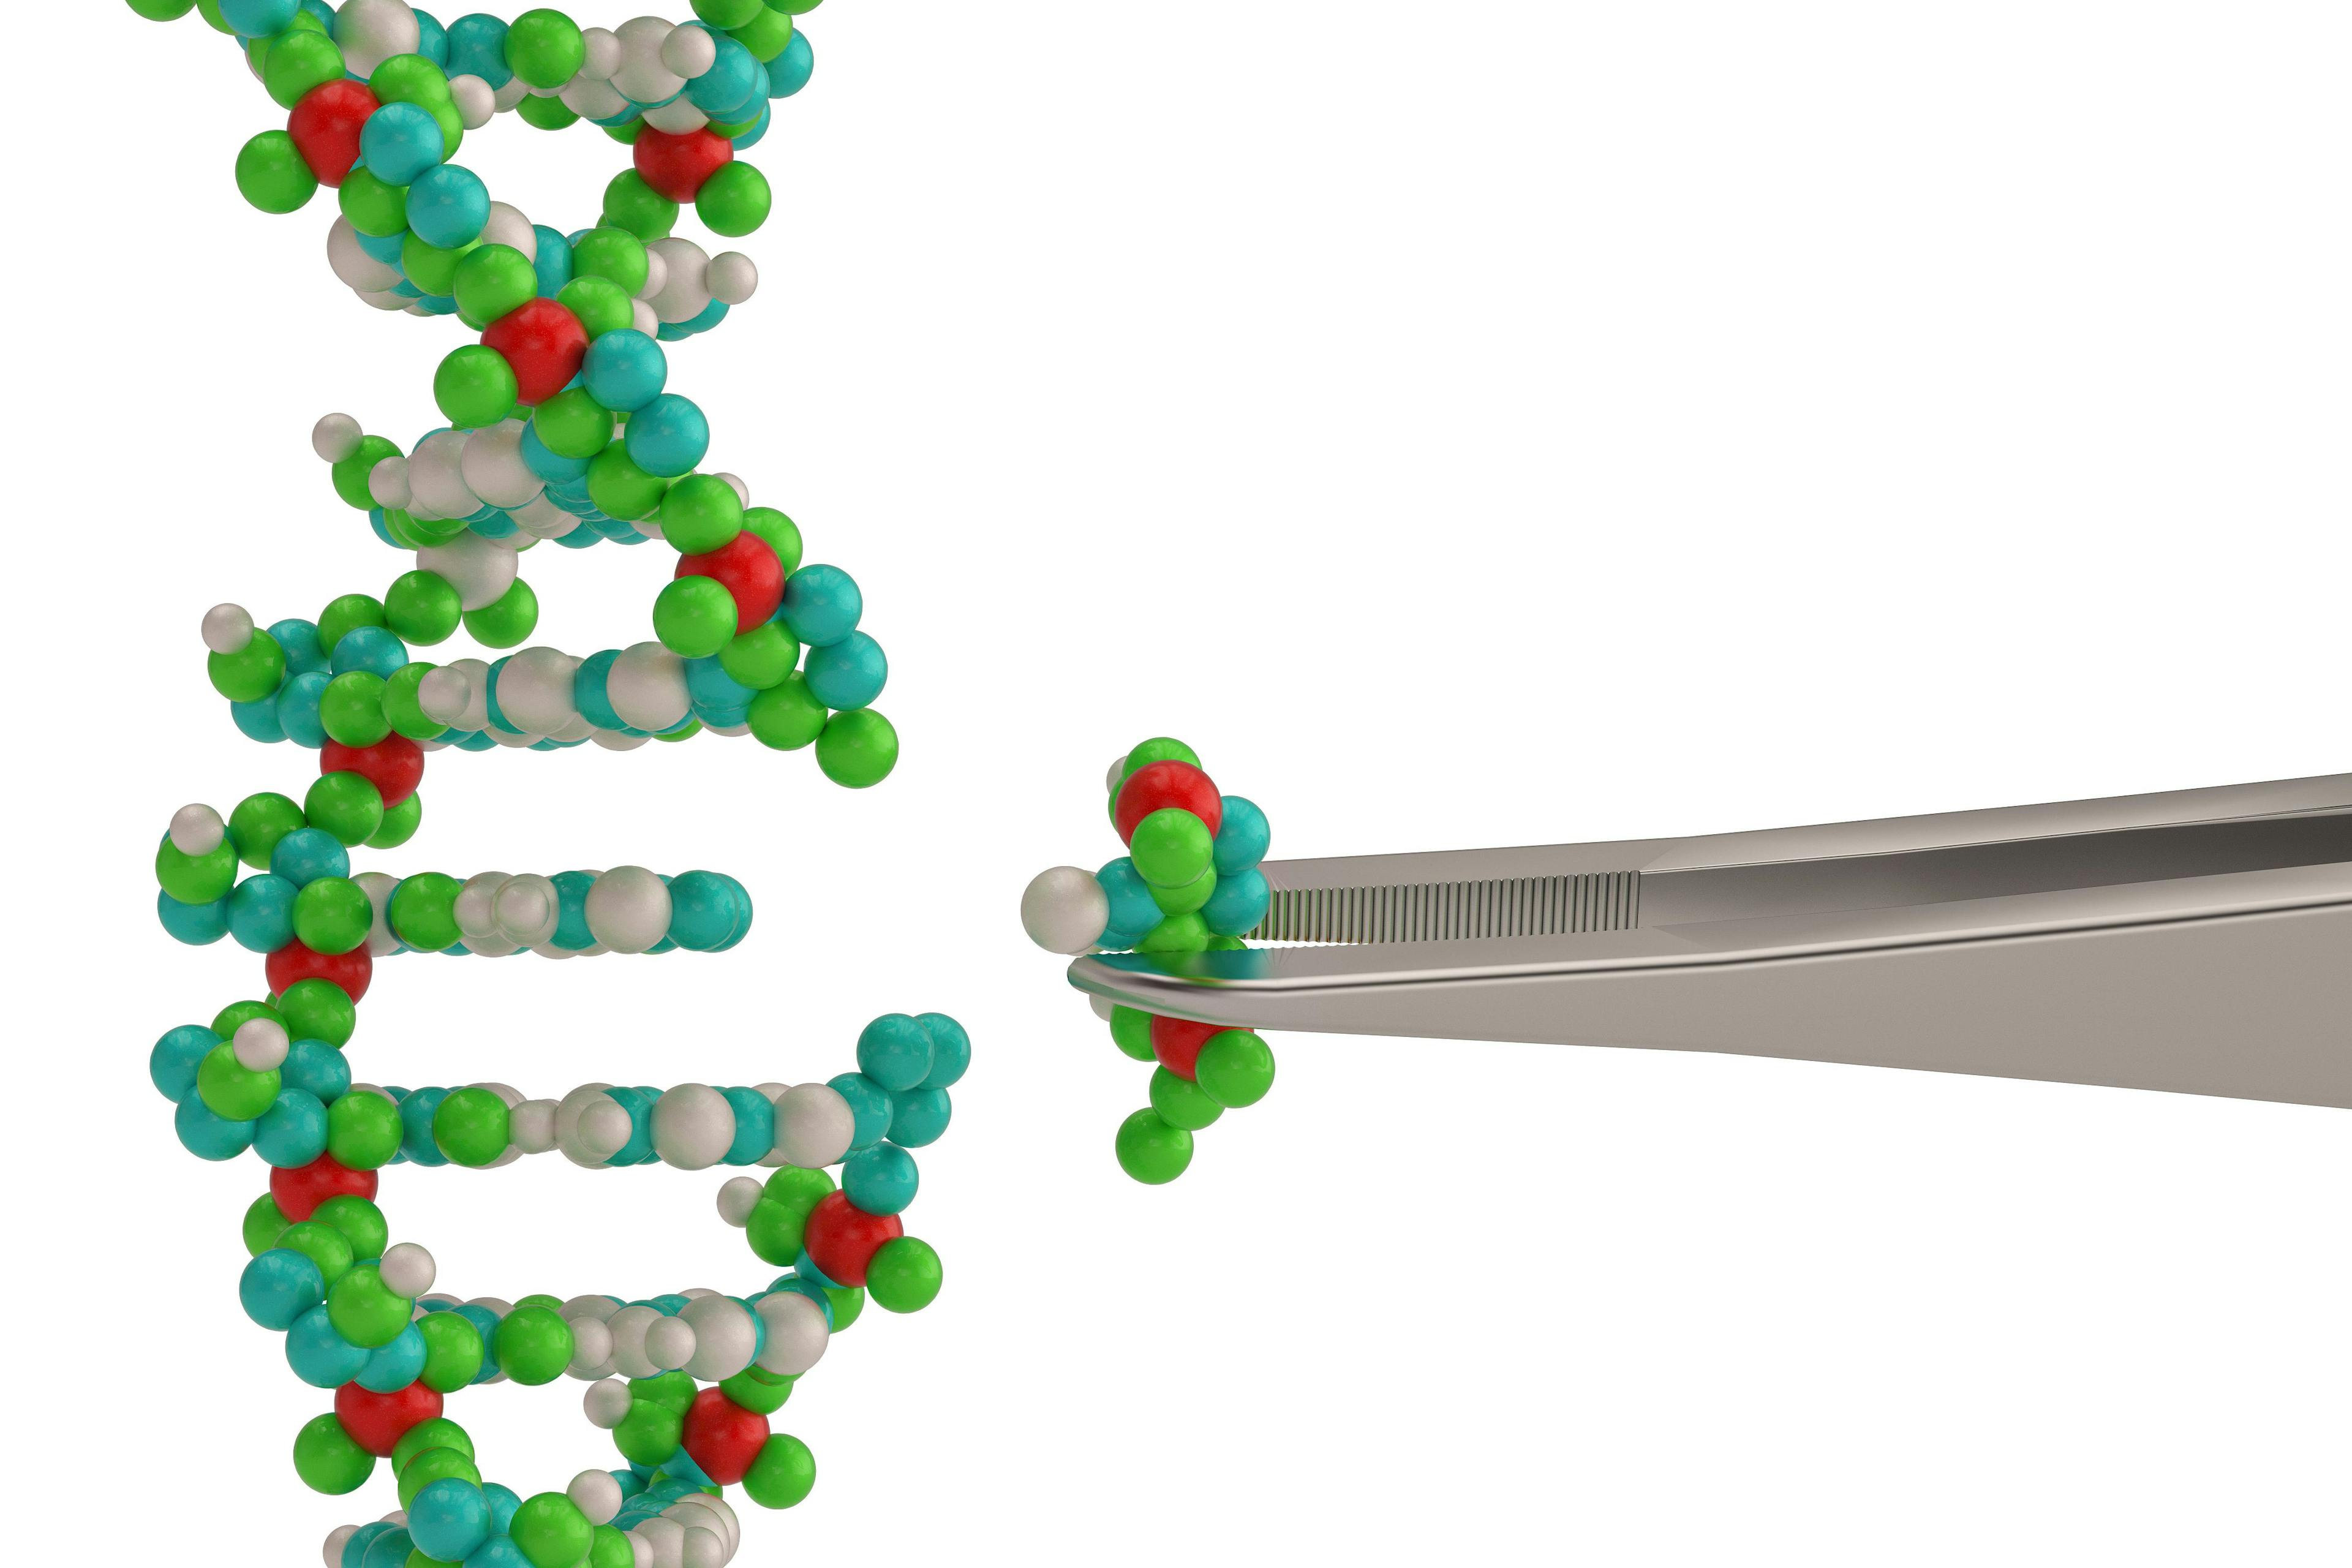 CRISPR Gene-Editing Shows Promise Against HIV